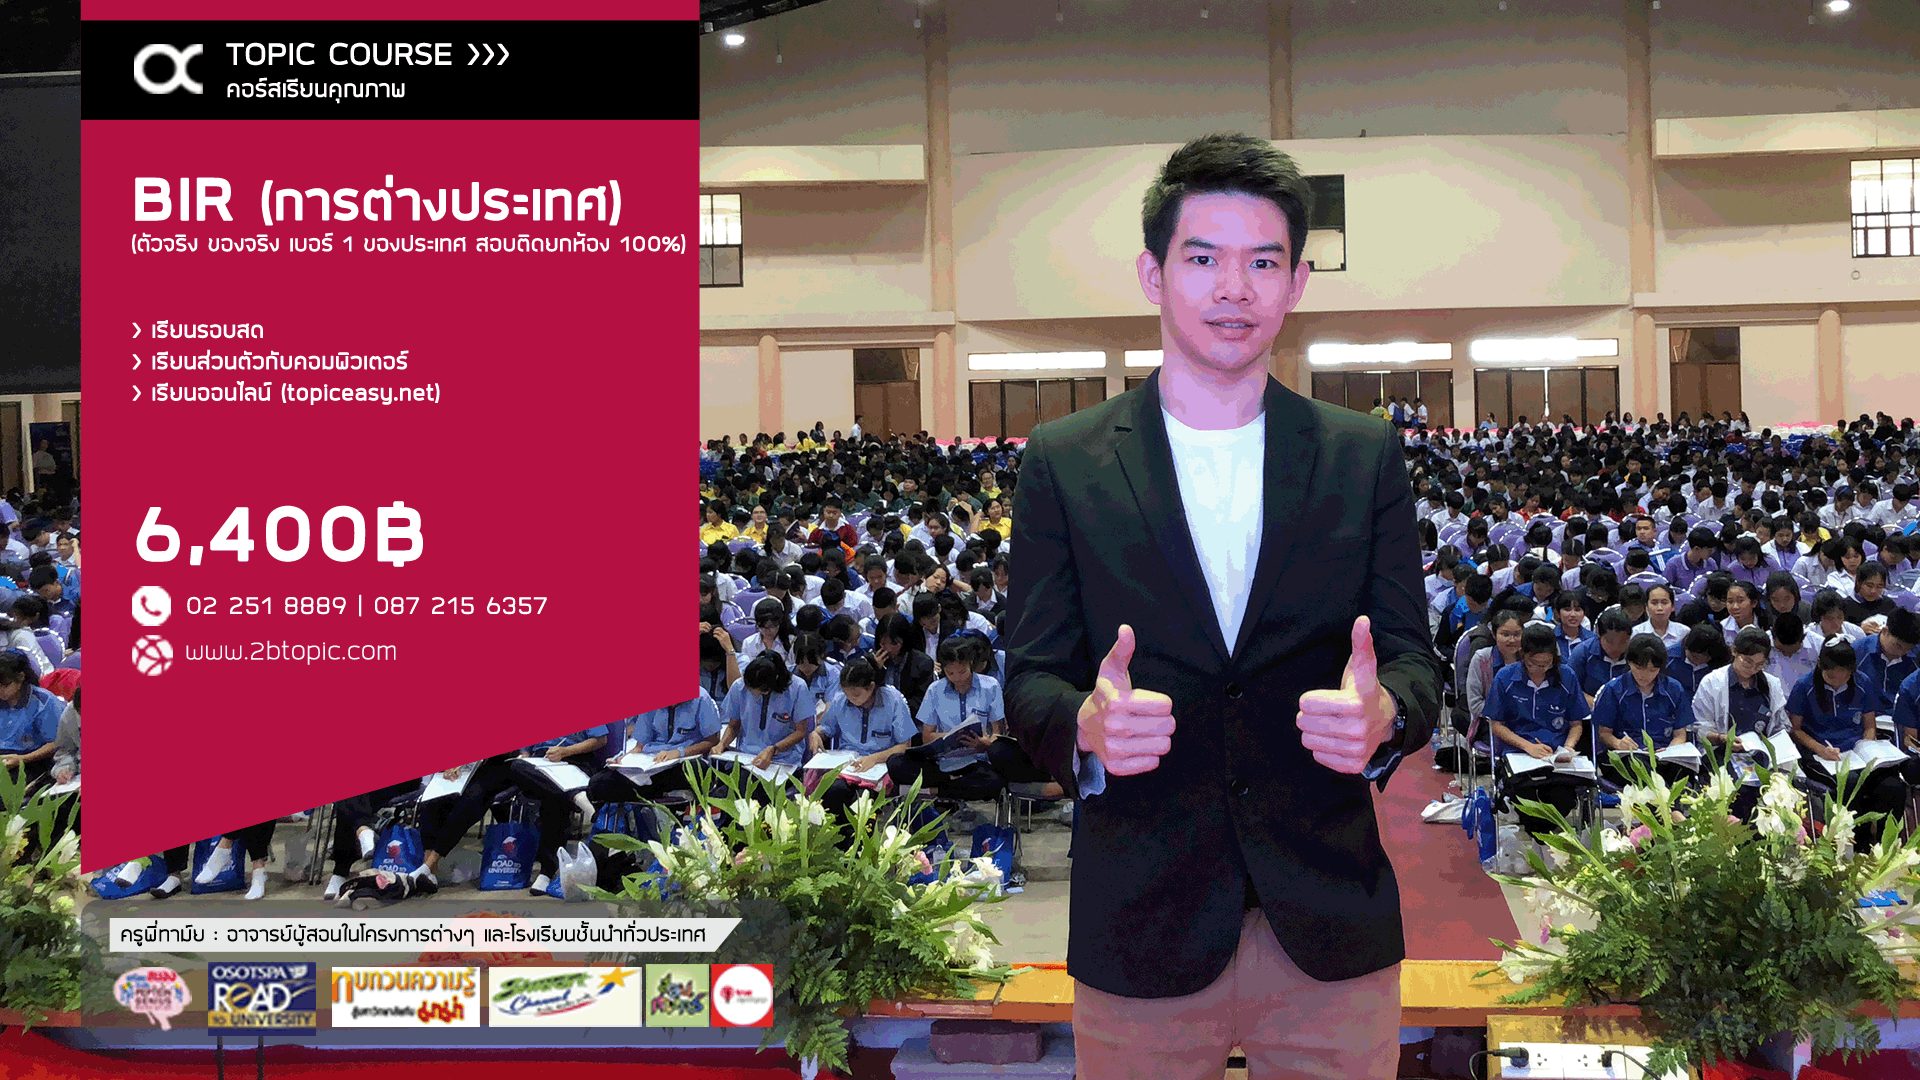 TopicAcademy สถาบันอันดับหนึ่งในการสอบตรงธรรมศาสตร์และจุฬา ... คลิกเพื่อดูรายละเอียดการเรียน PACKAGE BIR รัฐศาสตร์ต้นตำรับในตำนานที่ดีที่สุดของไทย สอบติดยกห้อง 100% !!!